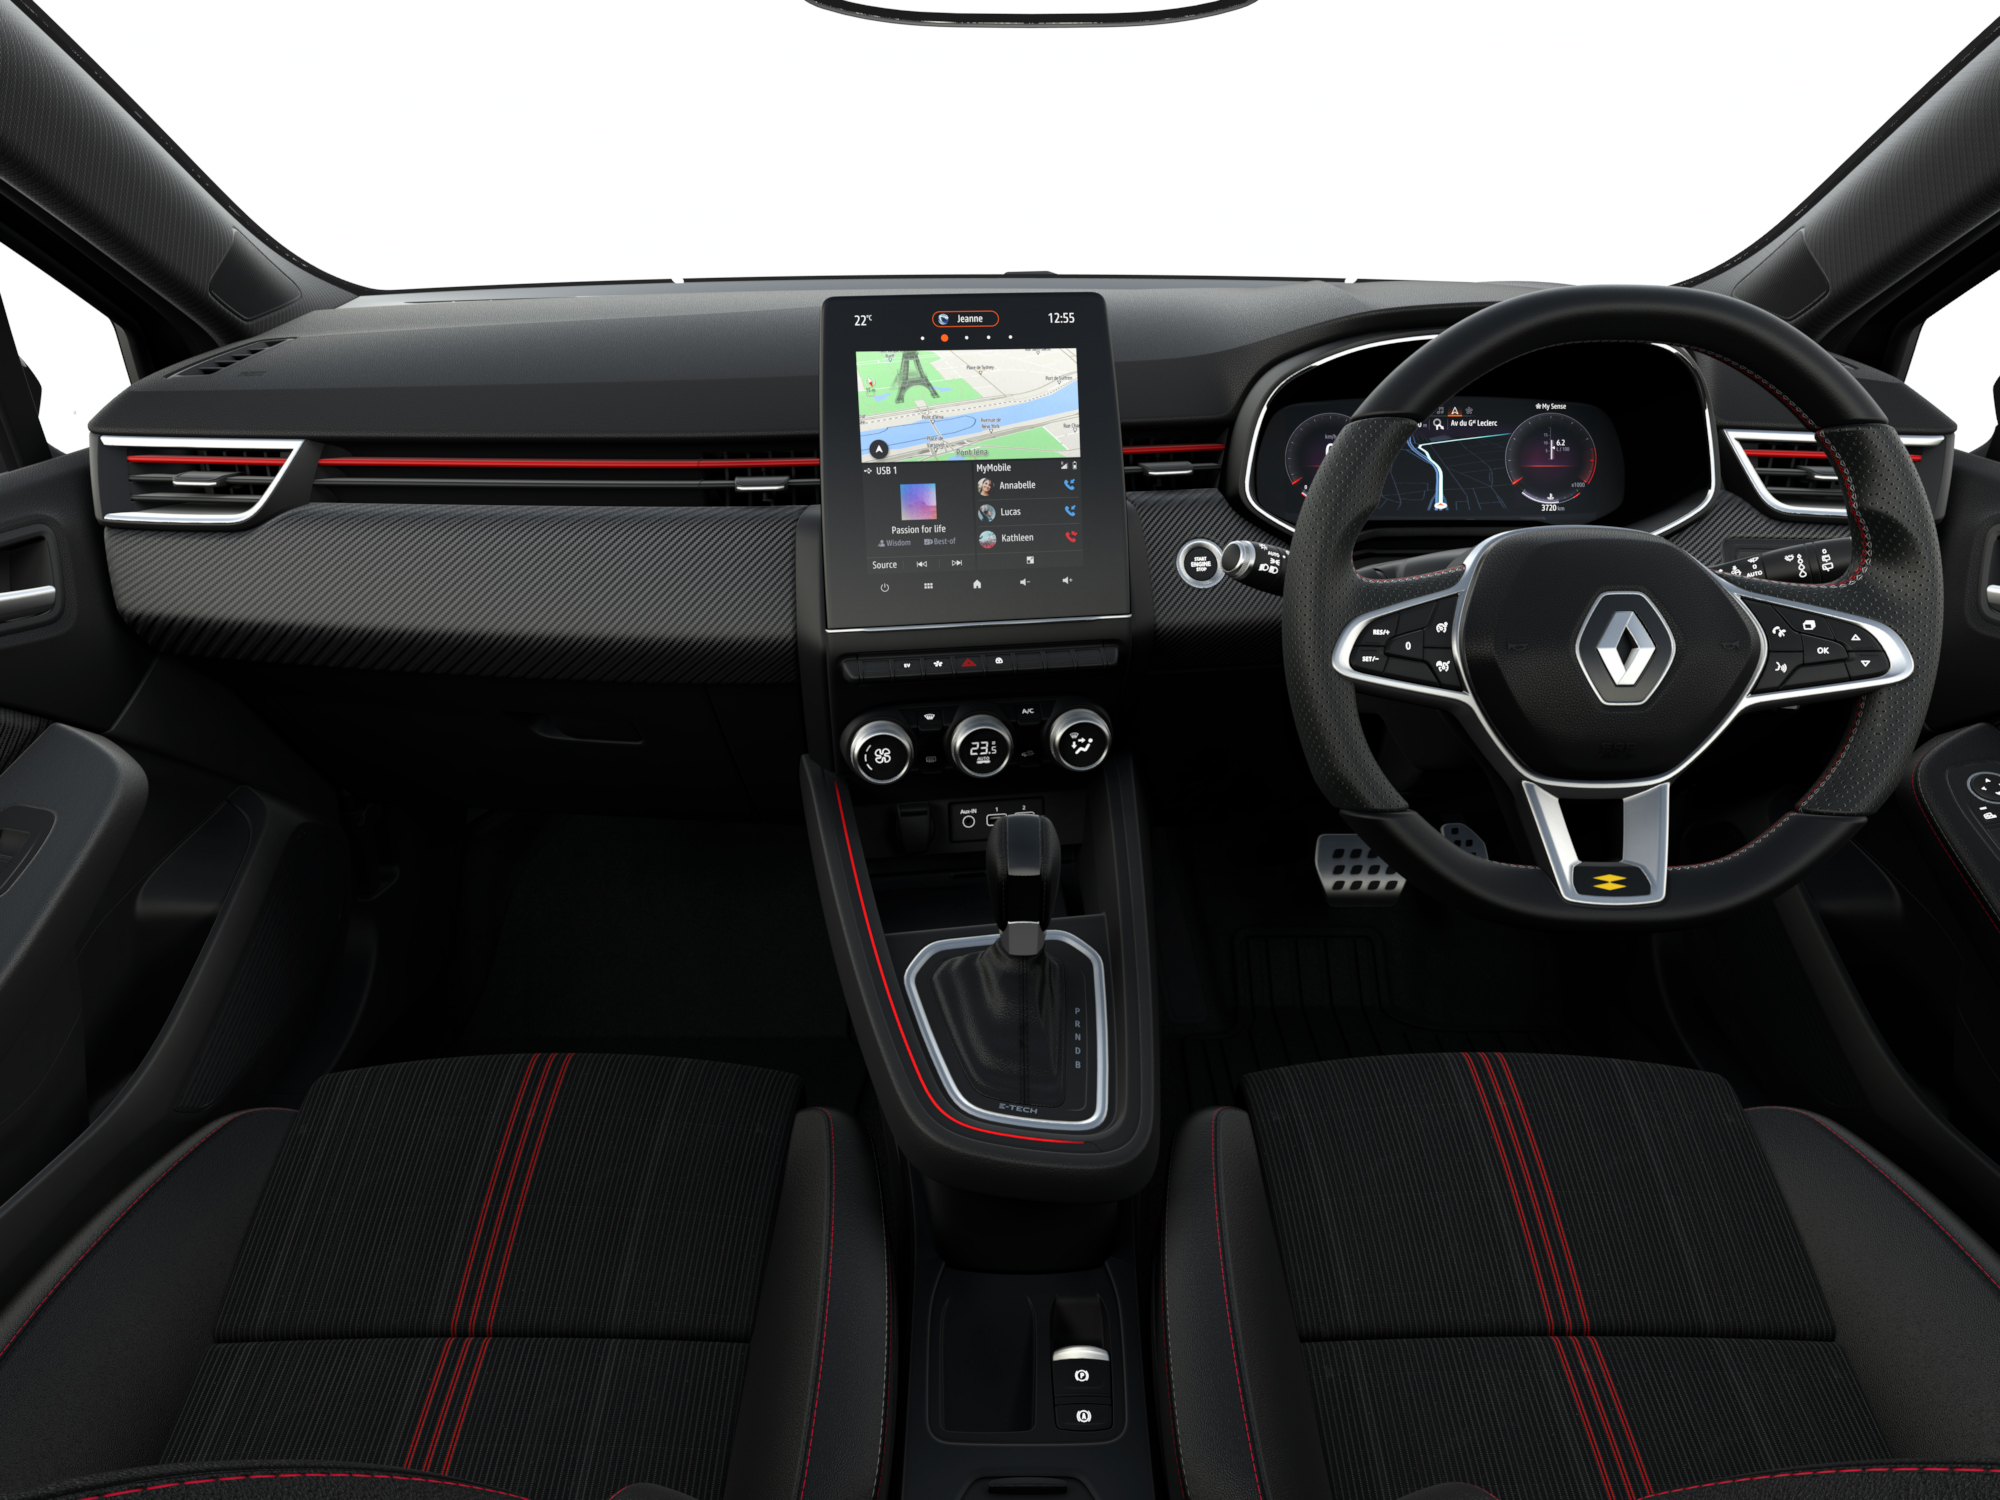 Renault RS interior